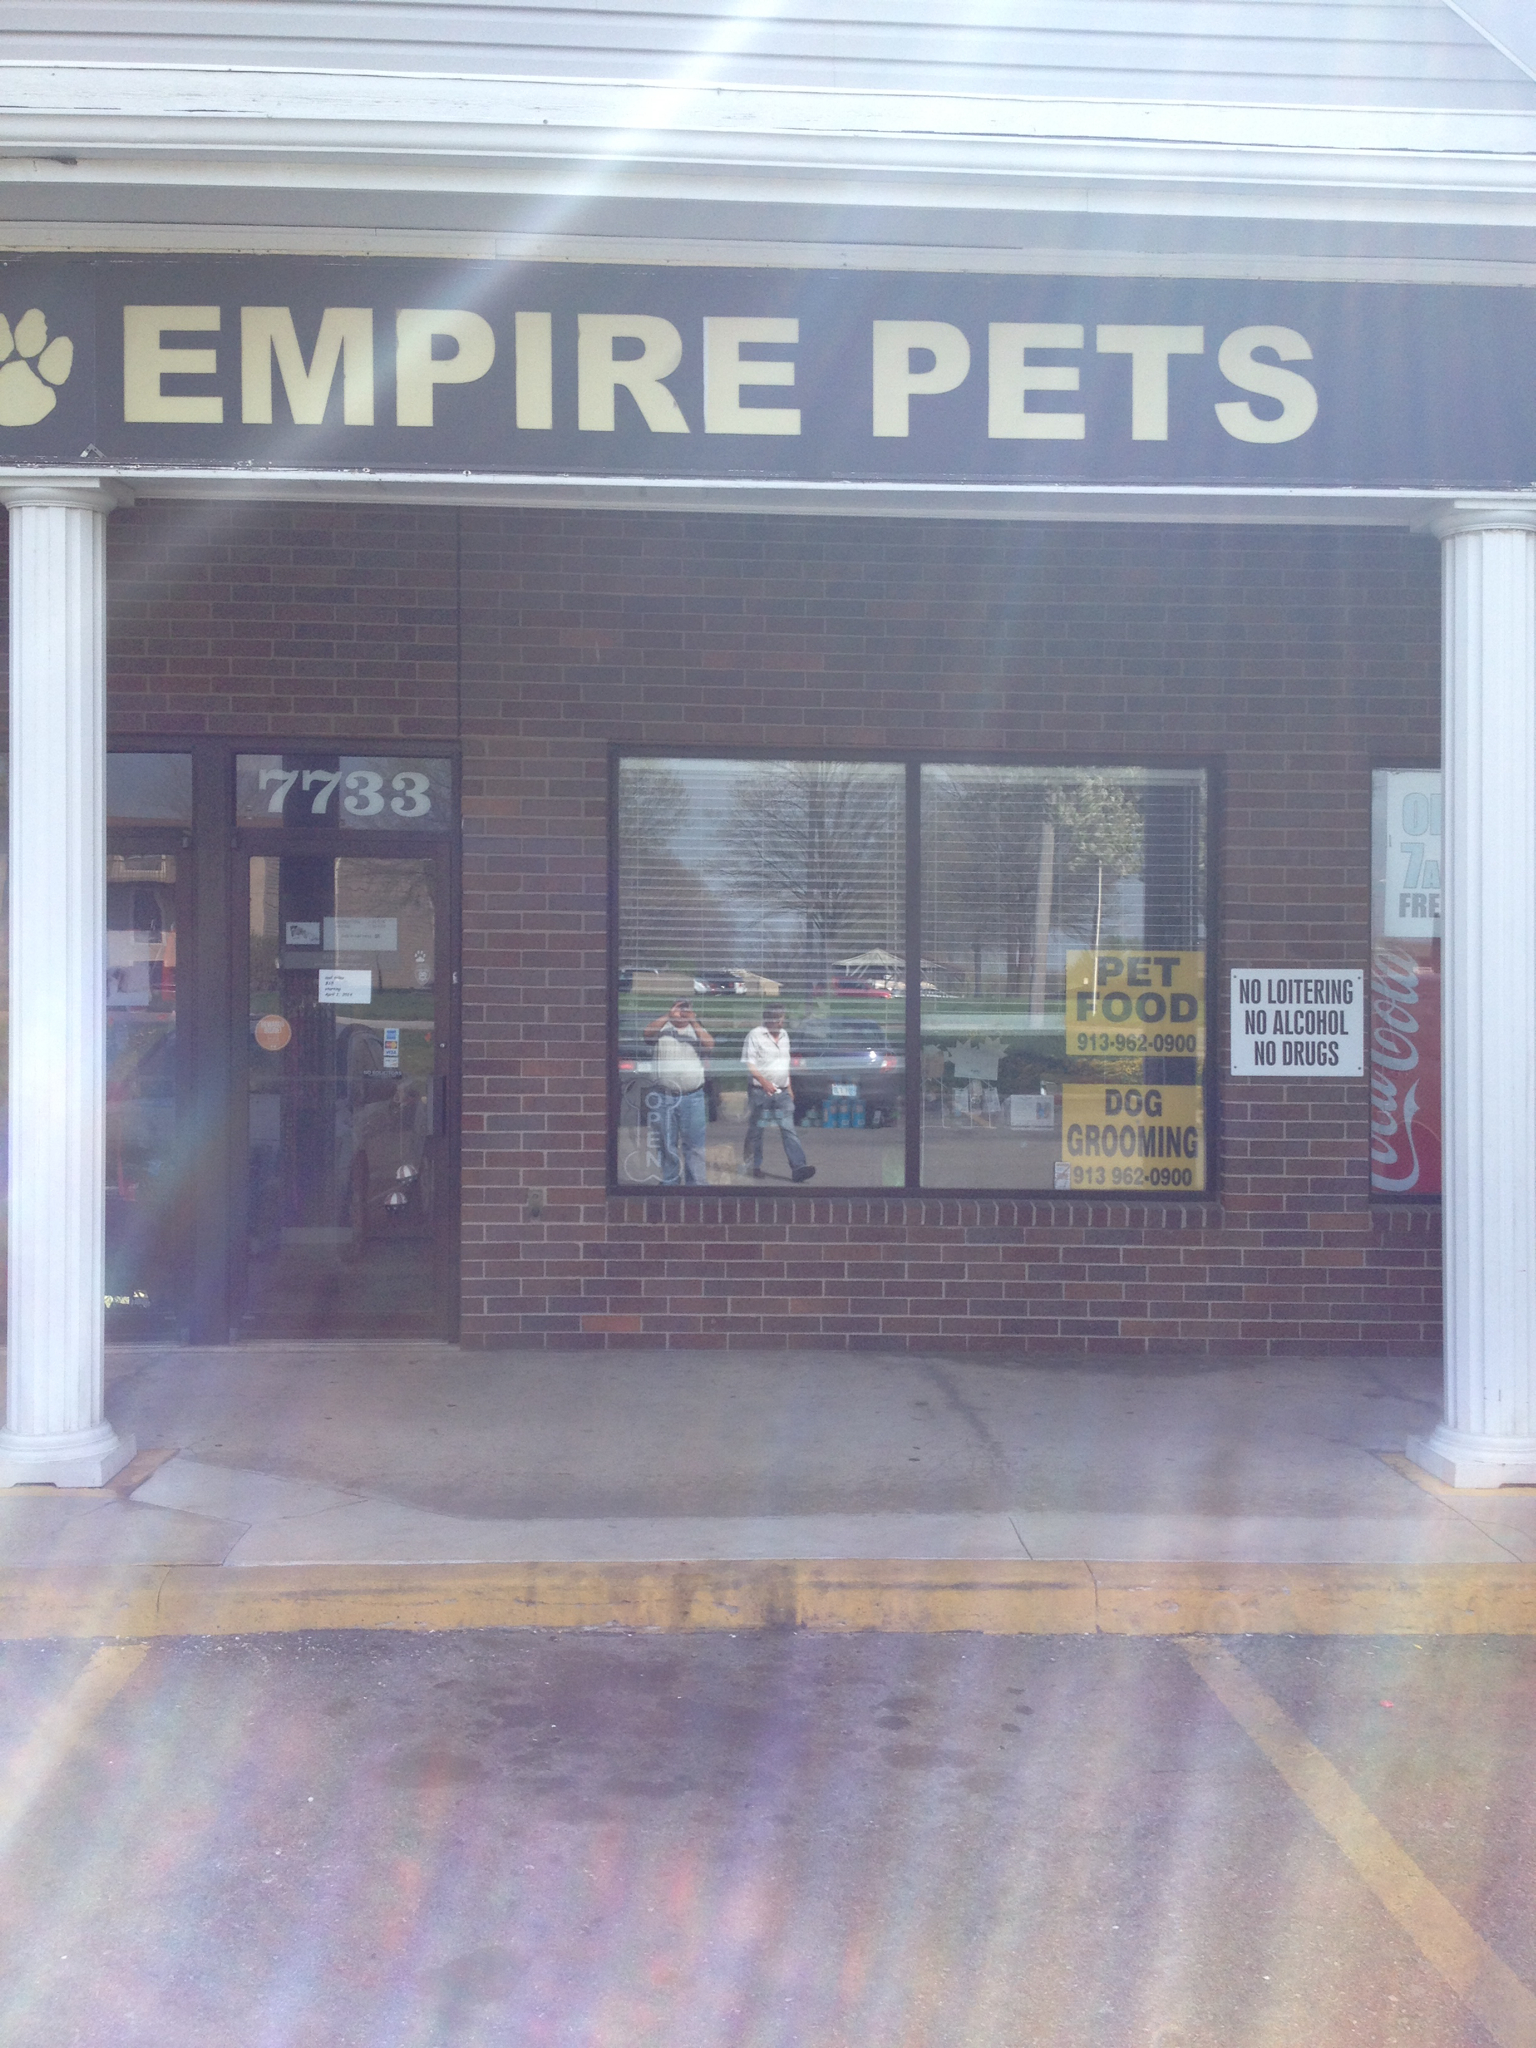 Empire Pets - Shawnee, KS 66216